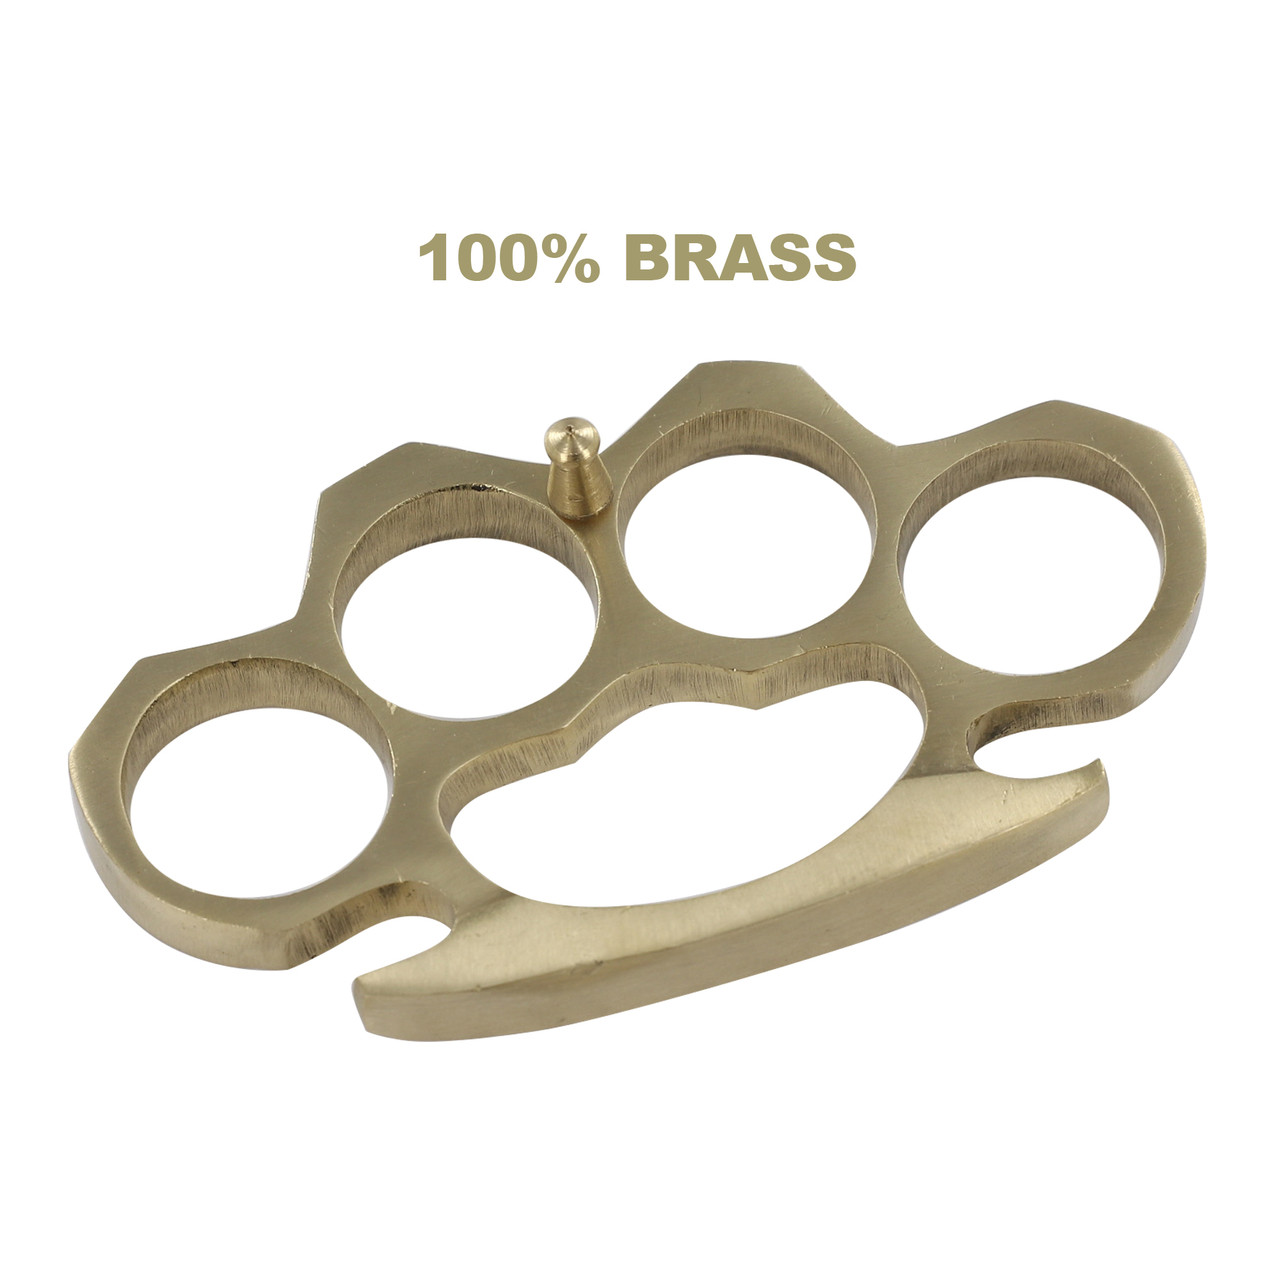 Genuine Brass Knuckle Buckle